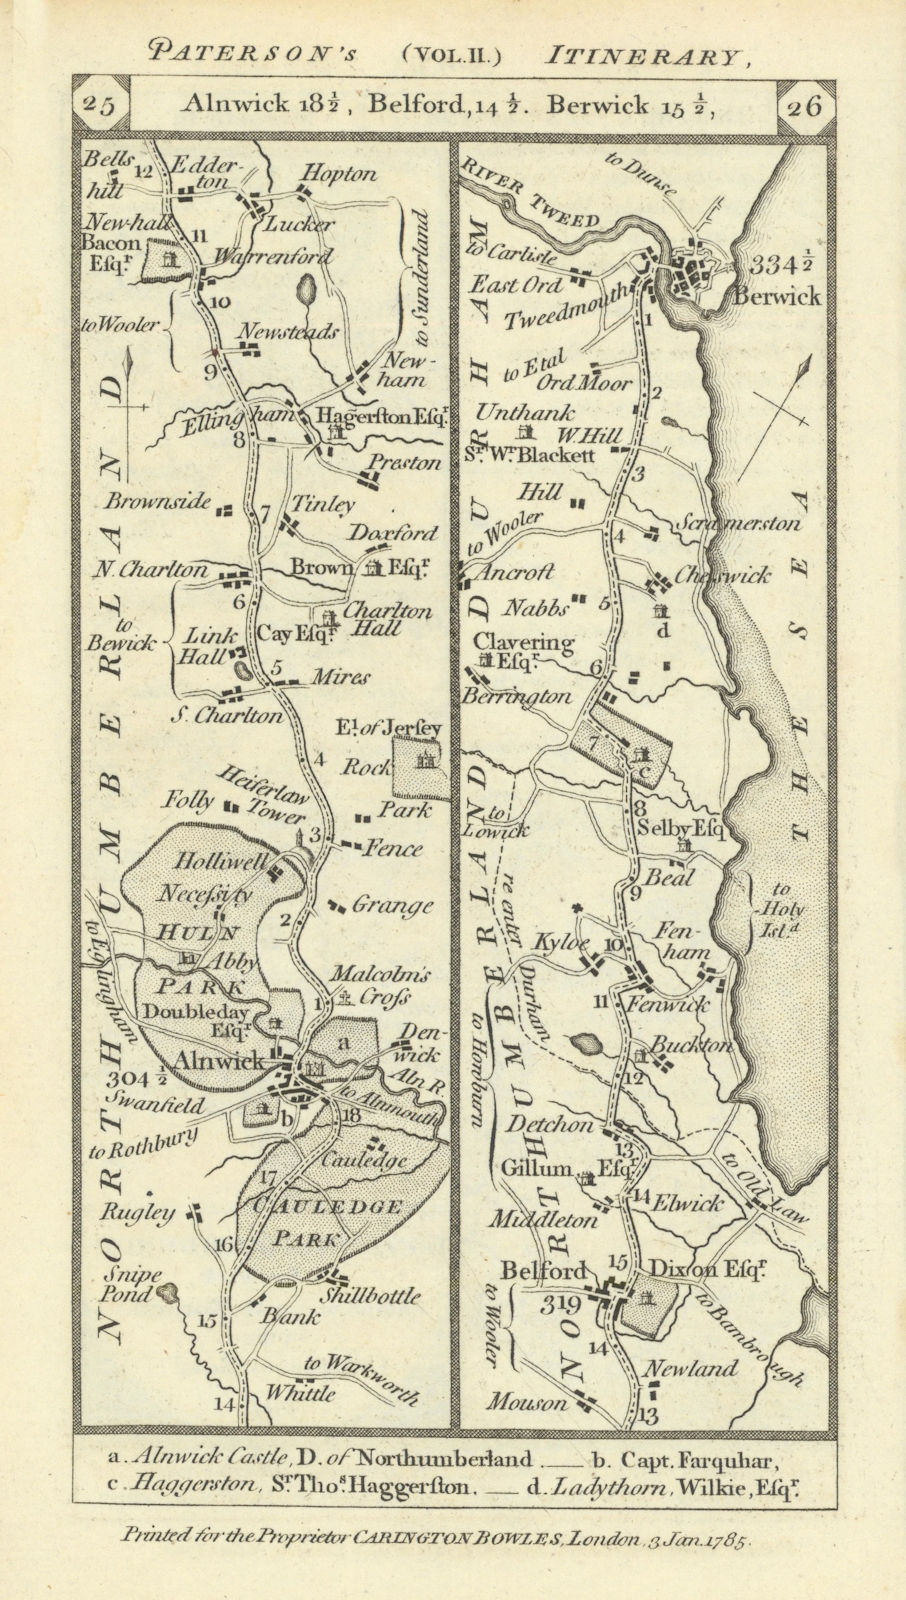 Associate Product Alnwick - Belford - Fenwick - Berwick road strip map PATERSON 1785 old